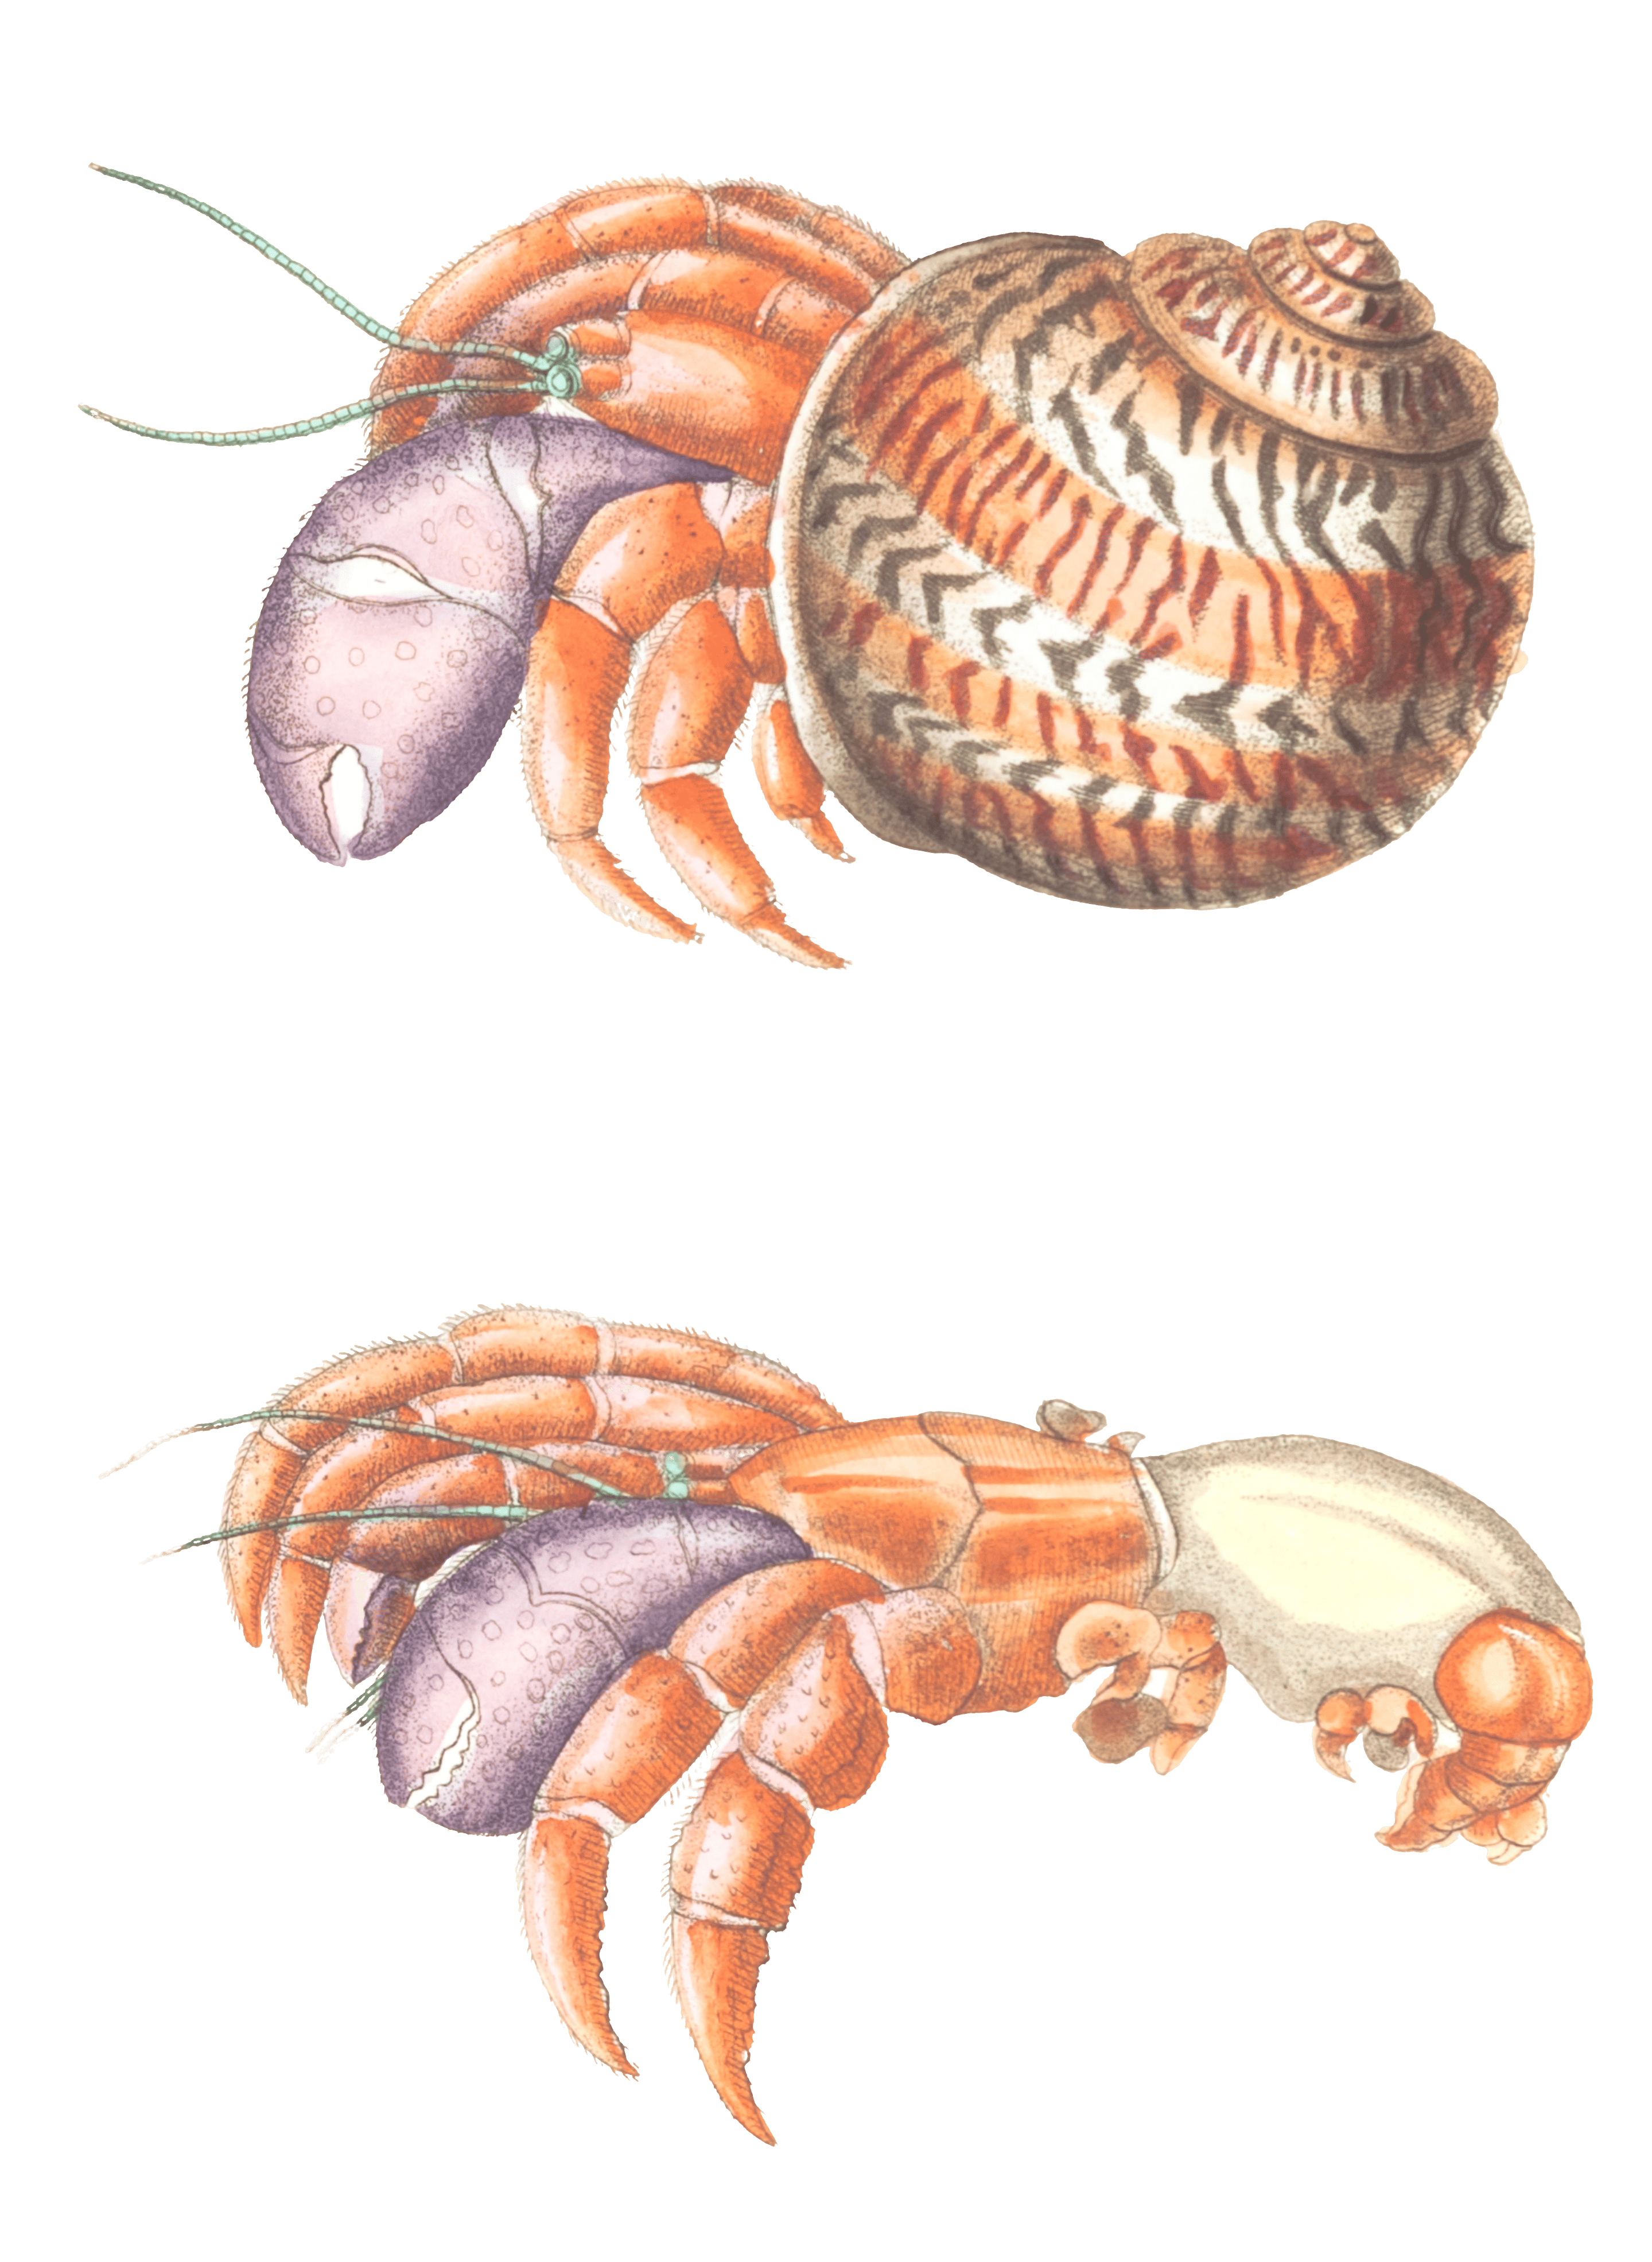 Diogenes Crab Hermit Crab Vintage Illustration